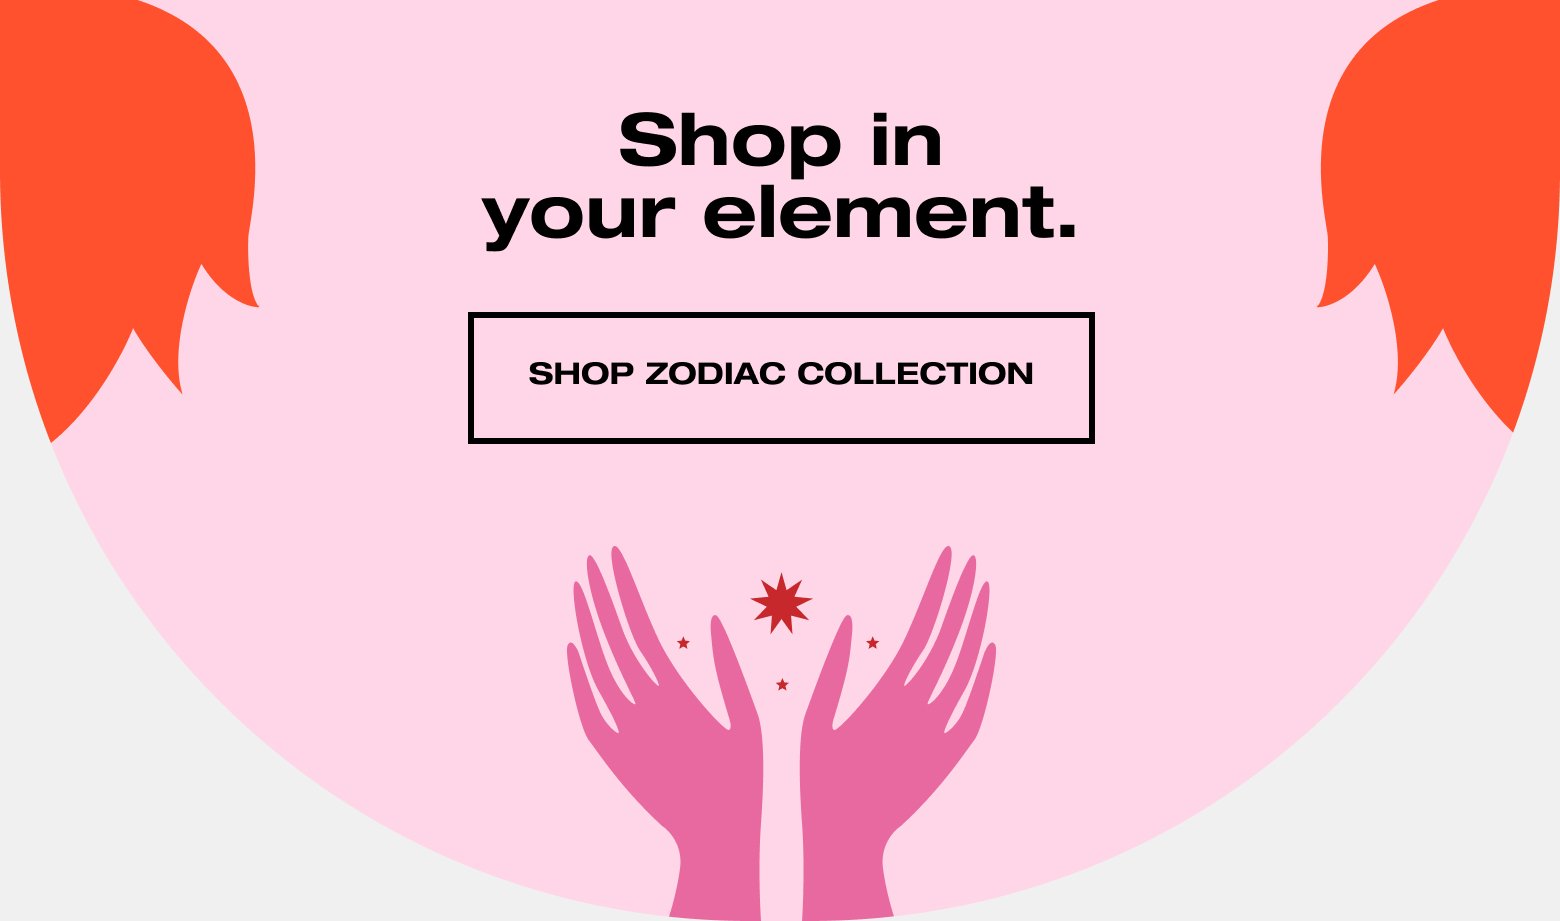 Shop in your element. SHOP ZODIAC COLLECTION